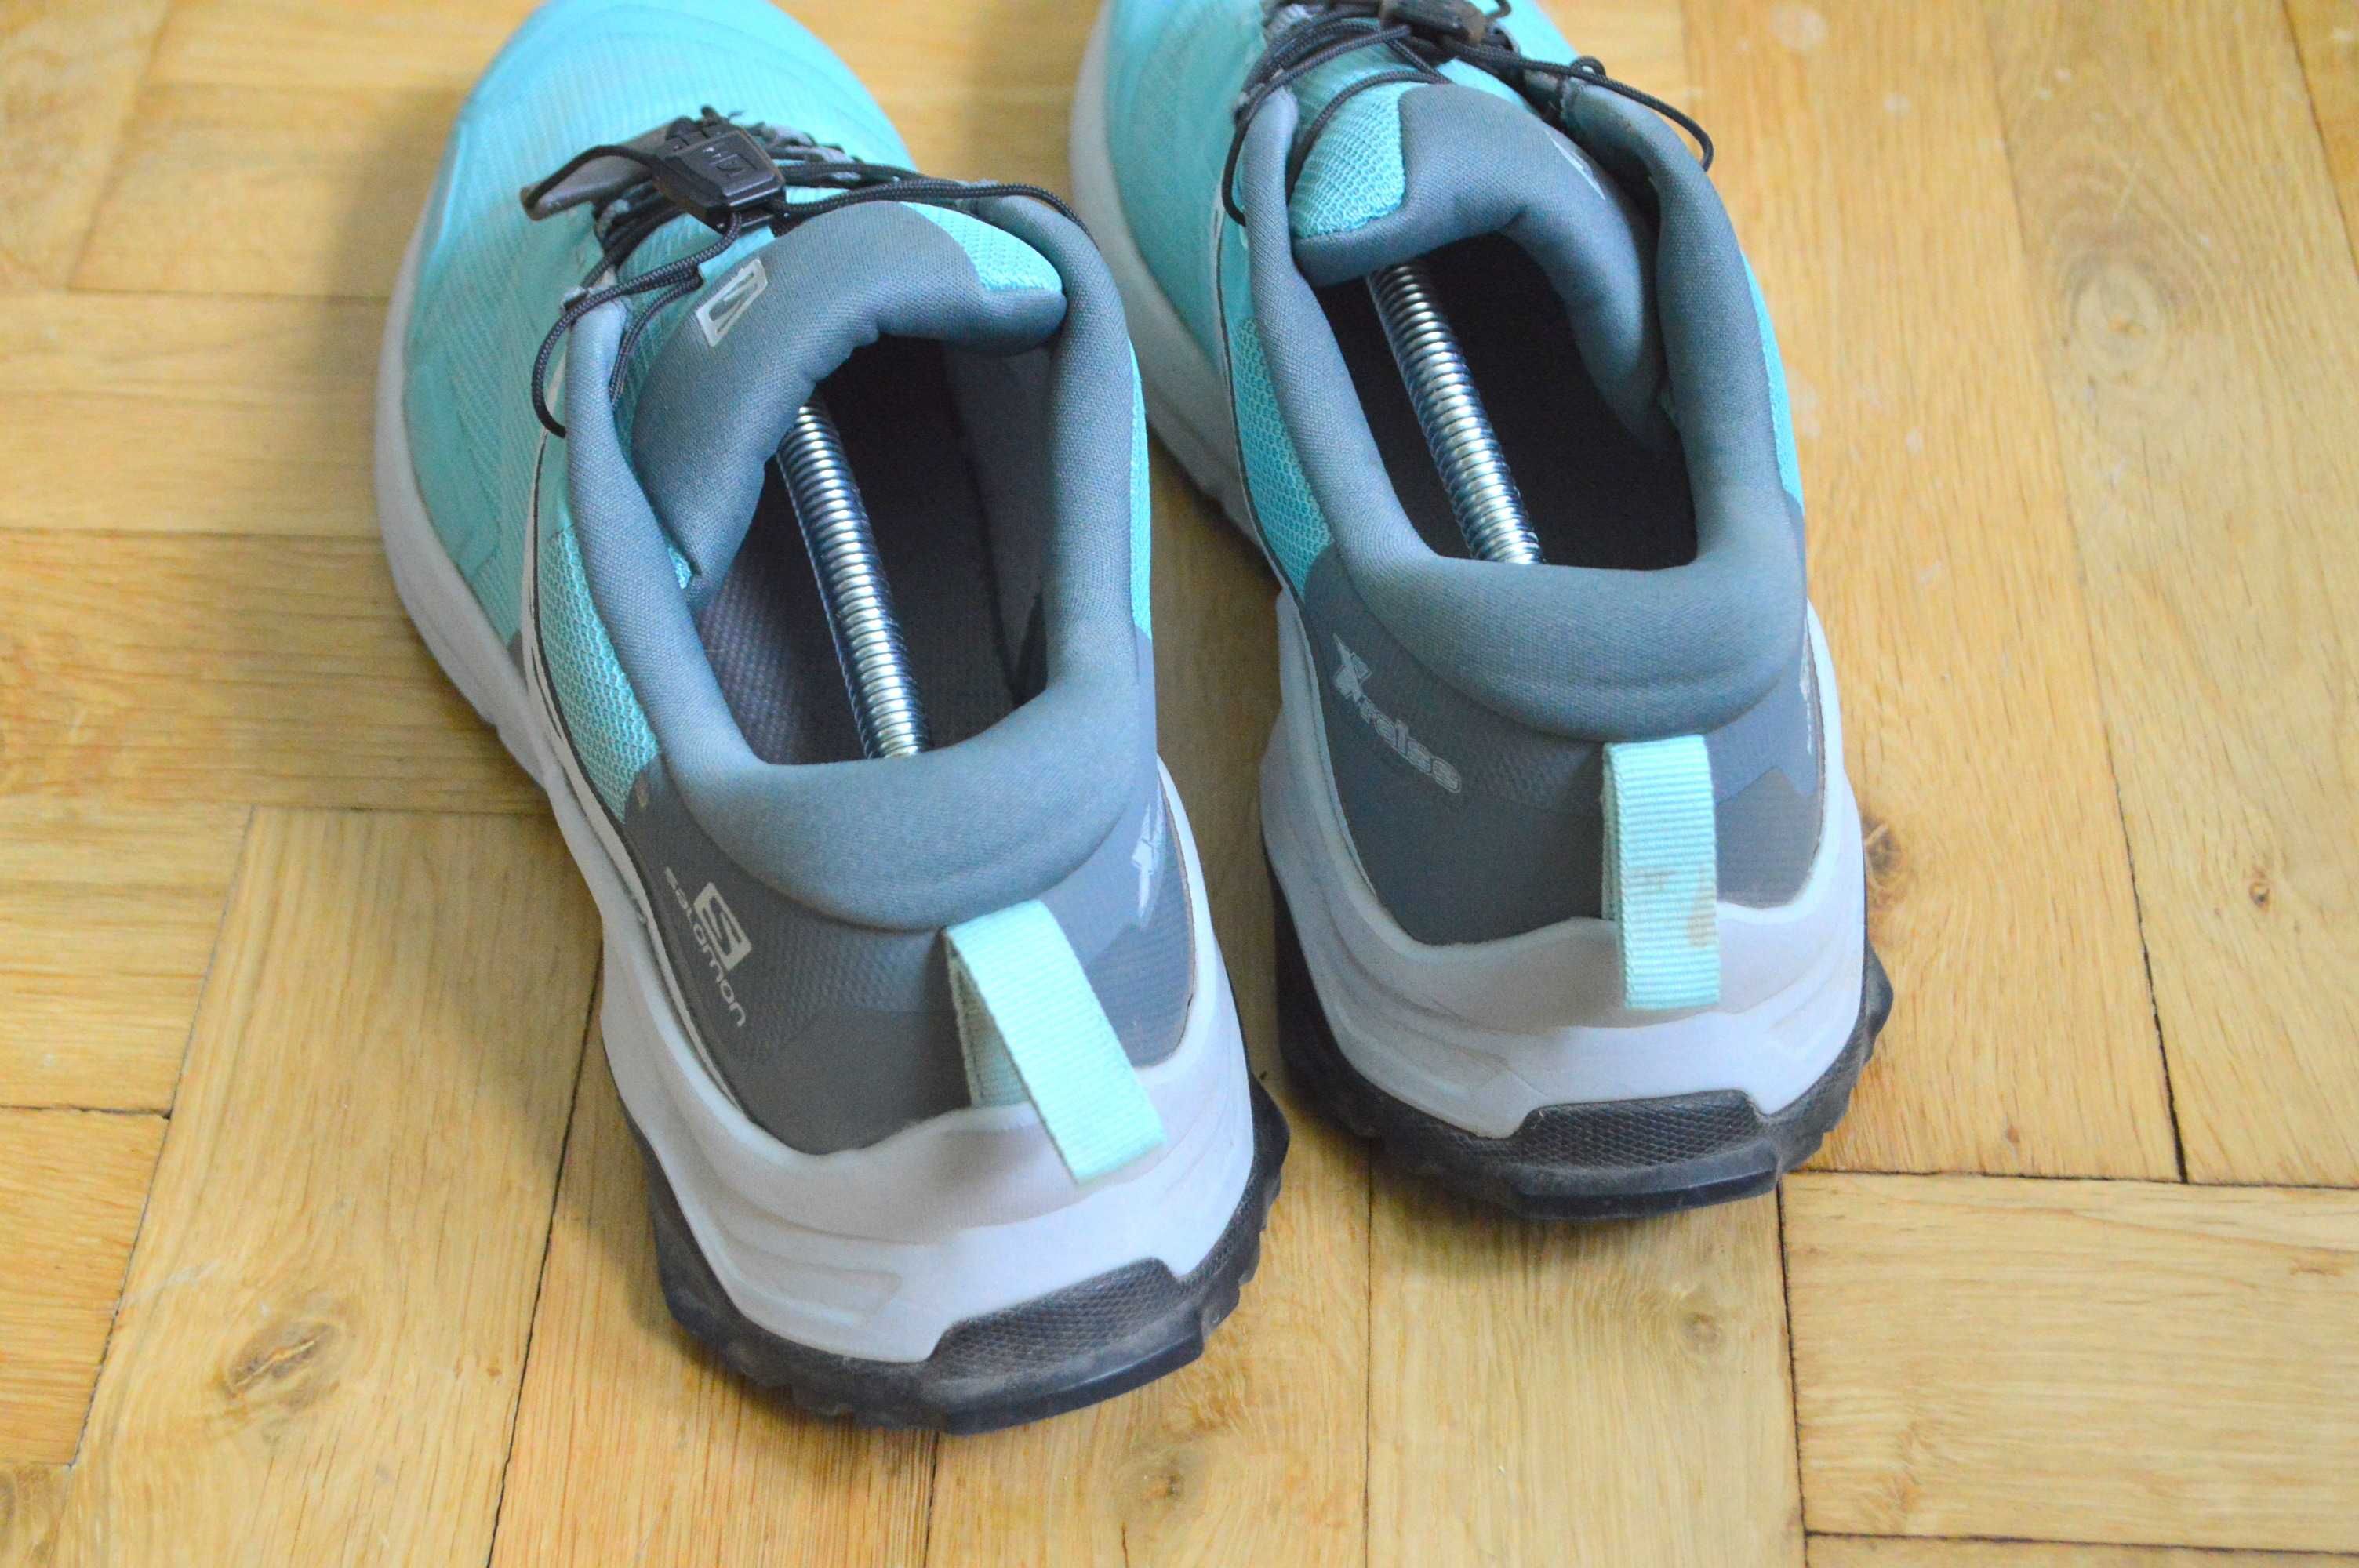 Salomon X Raise buty trekkingowe wygodne 41 błękitne